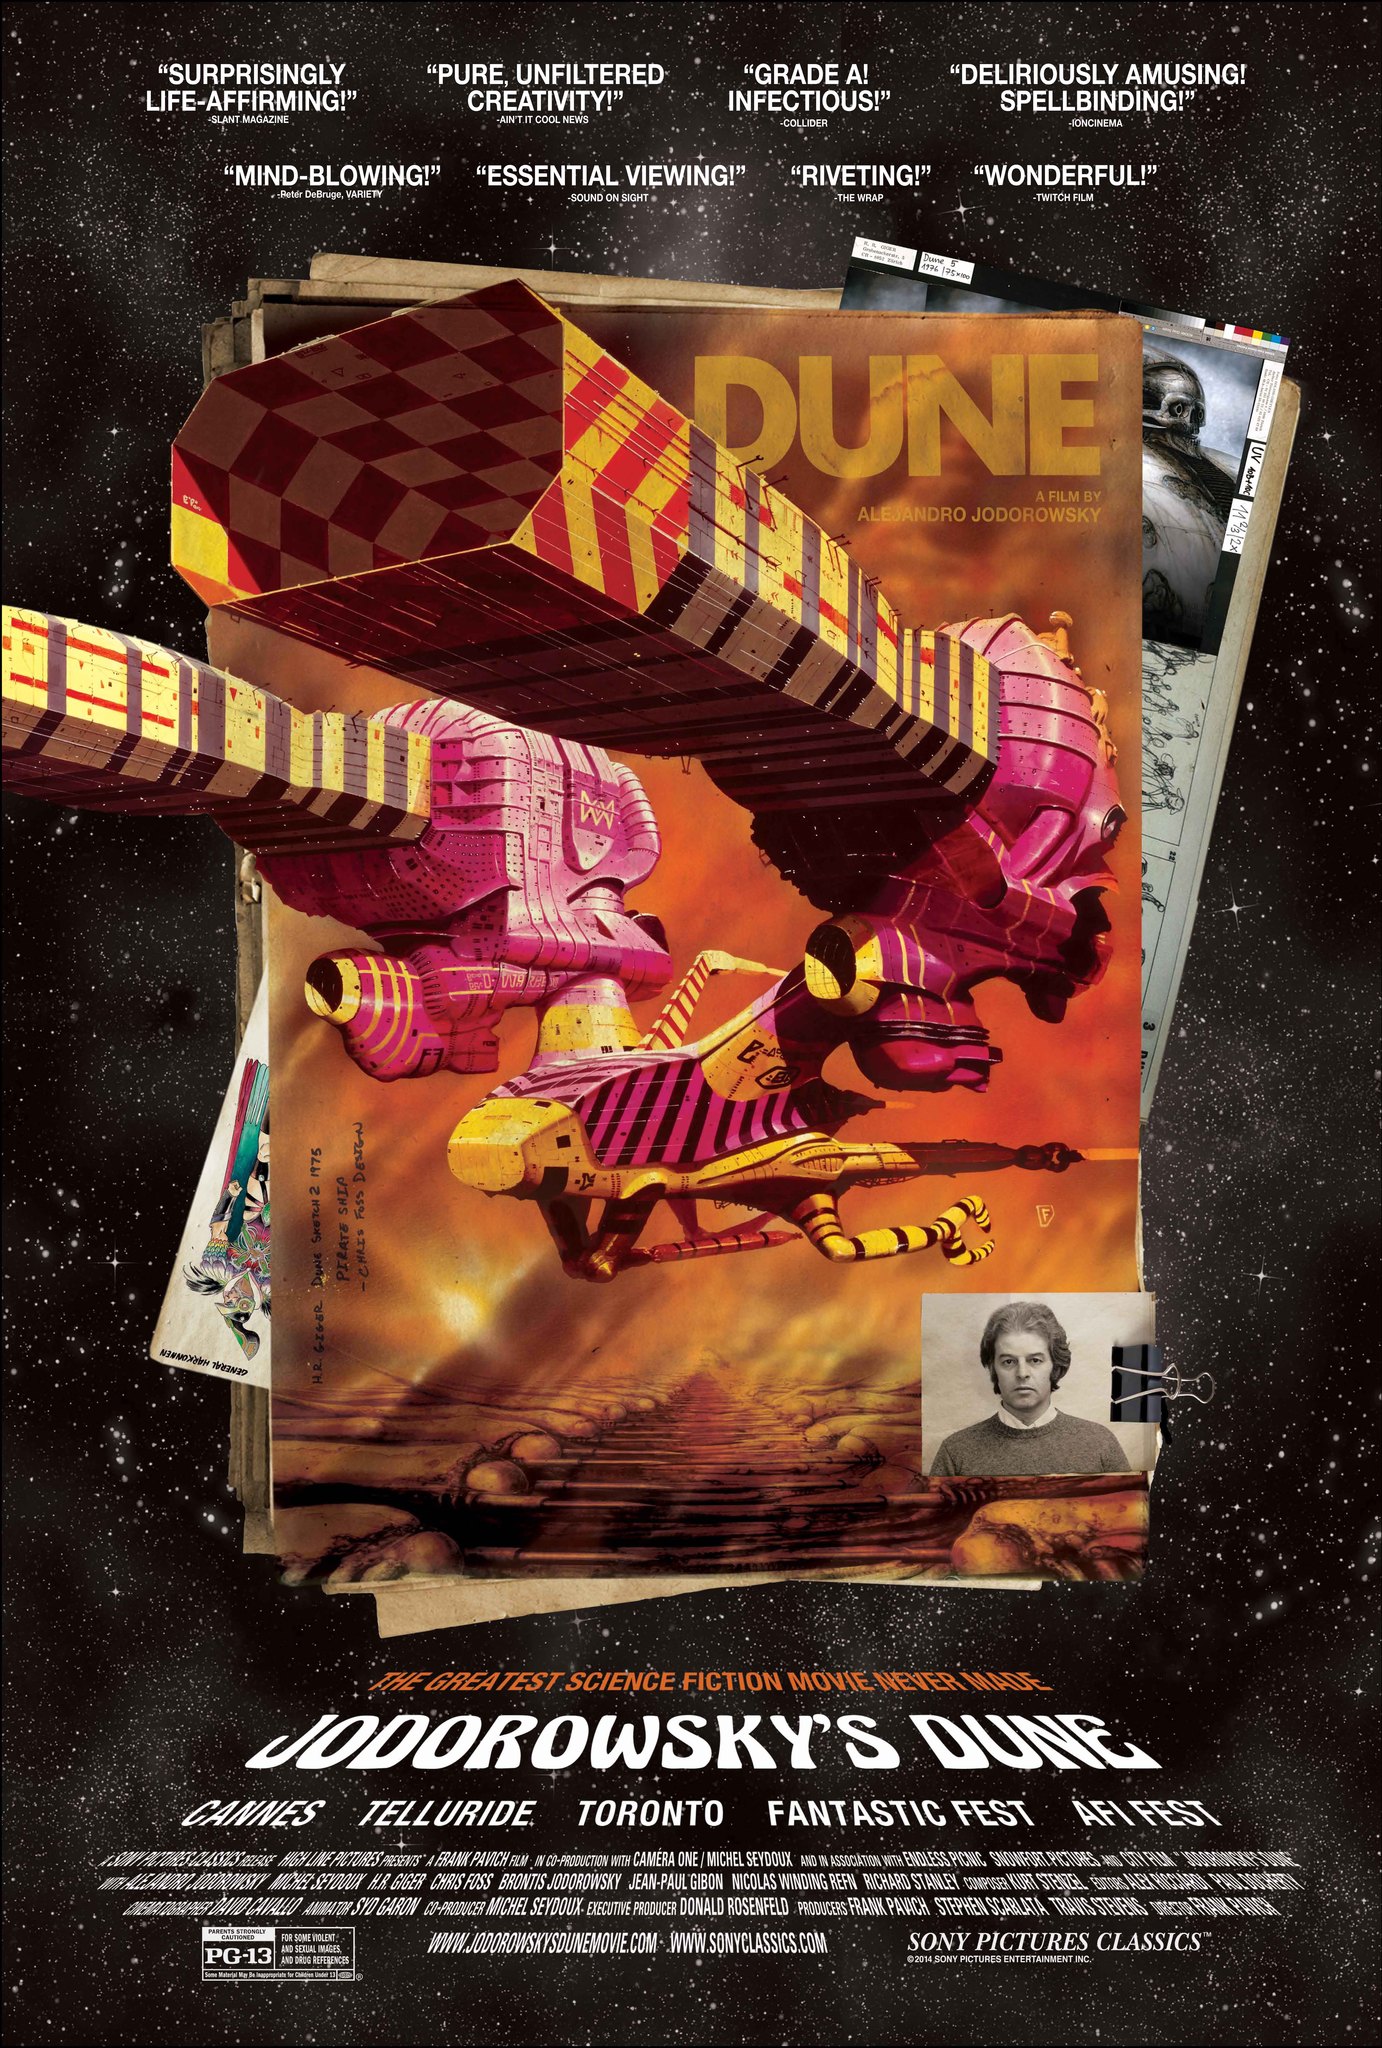  Jodorowsky's Dune (2013) poster